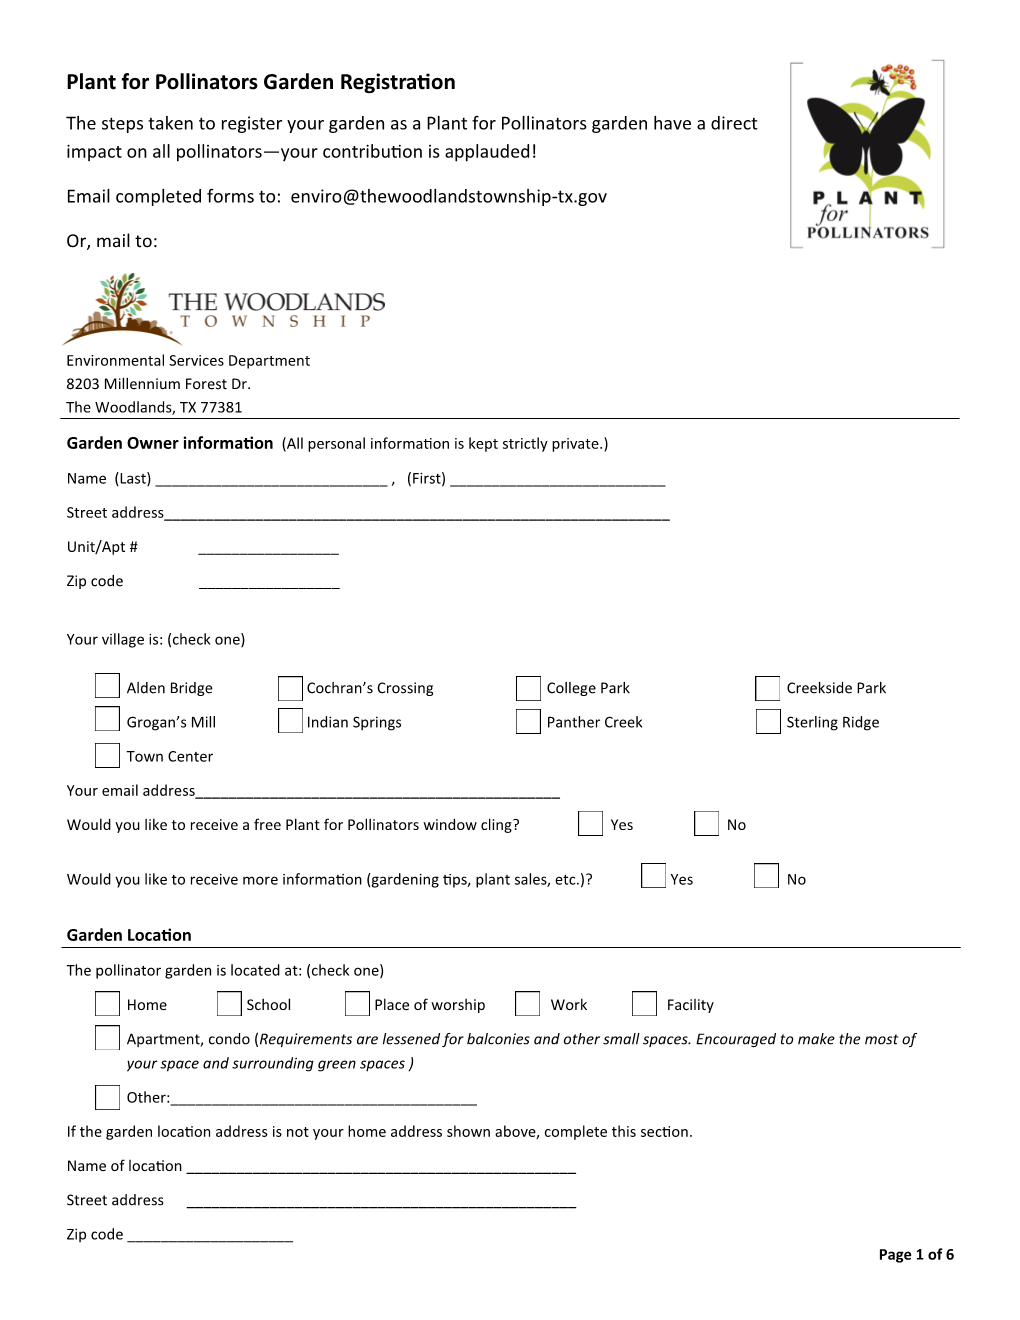 Plant for Pollinators Garden Registration Form